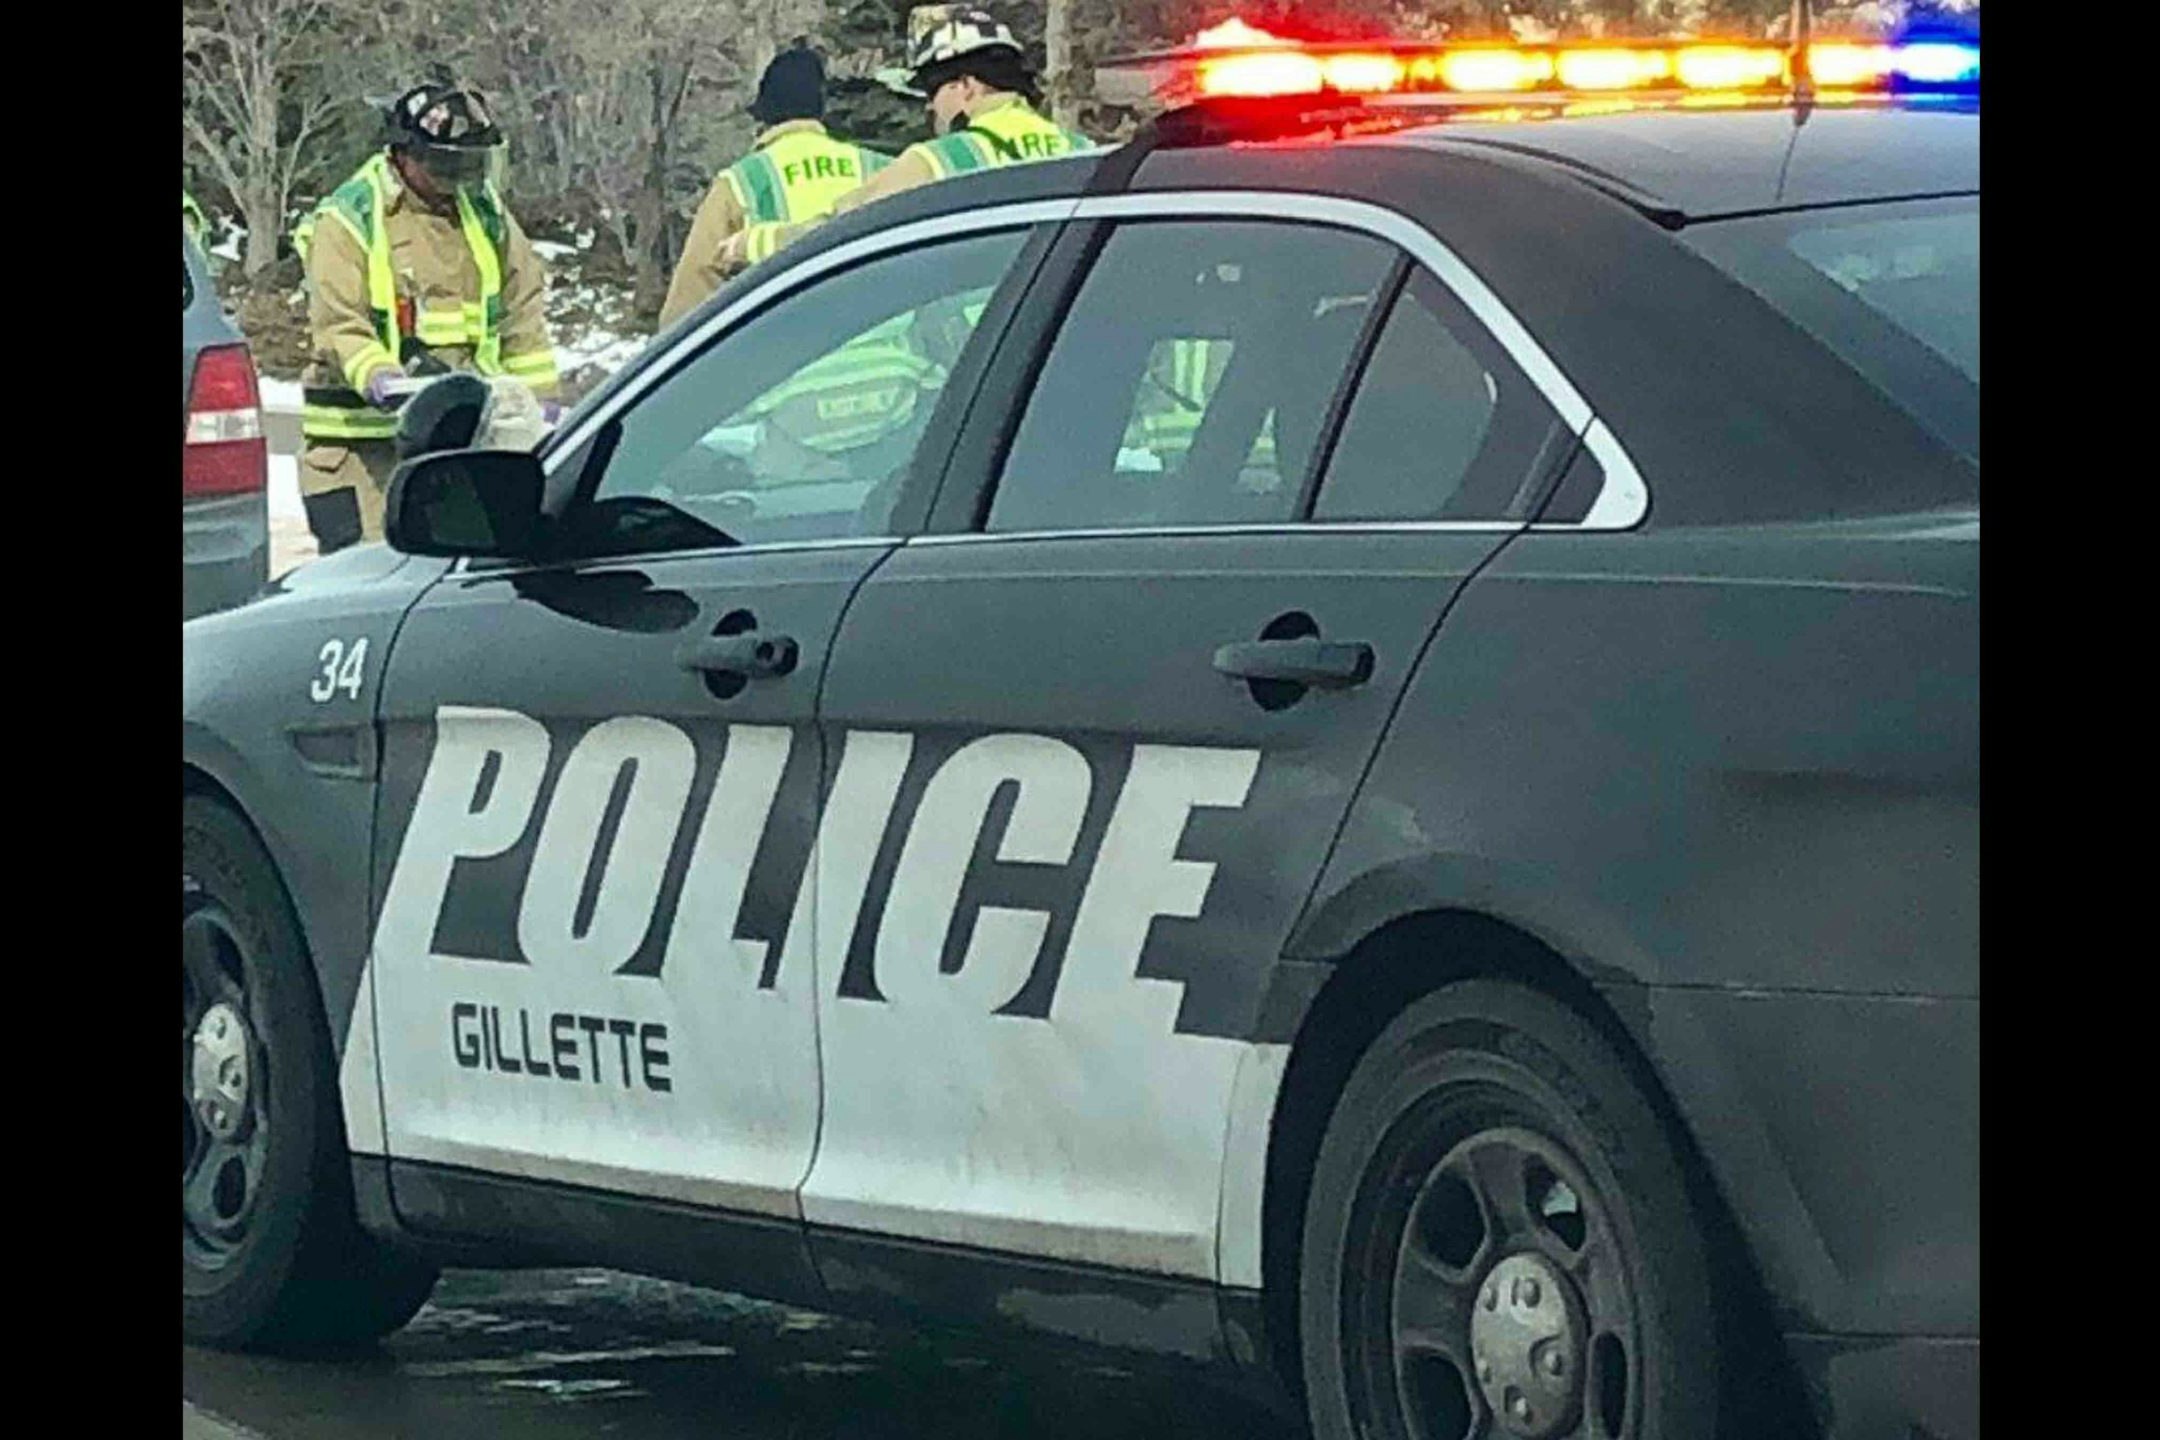 Gillette police scaled